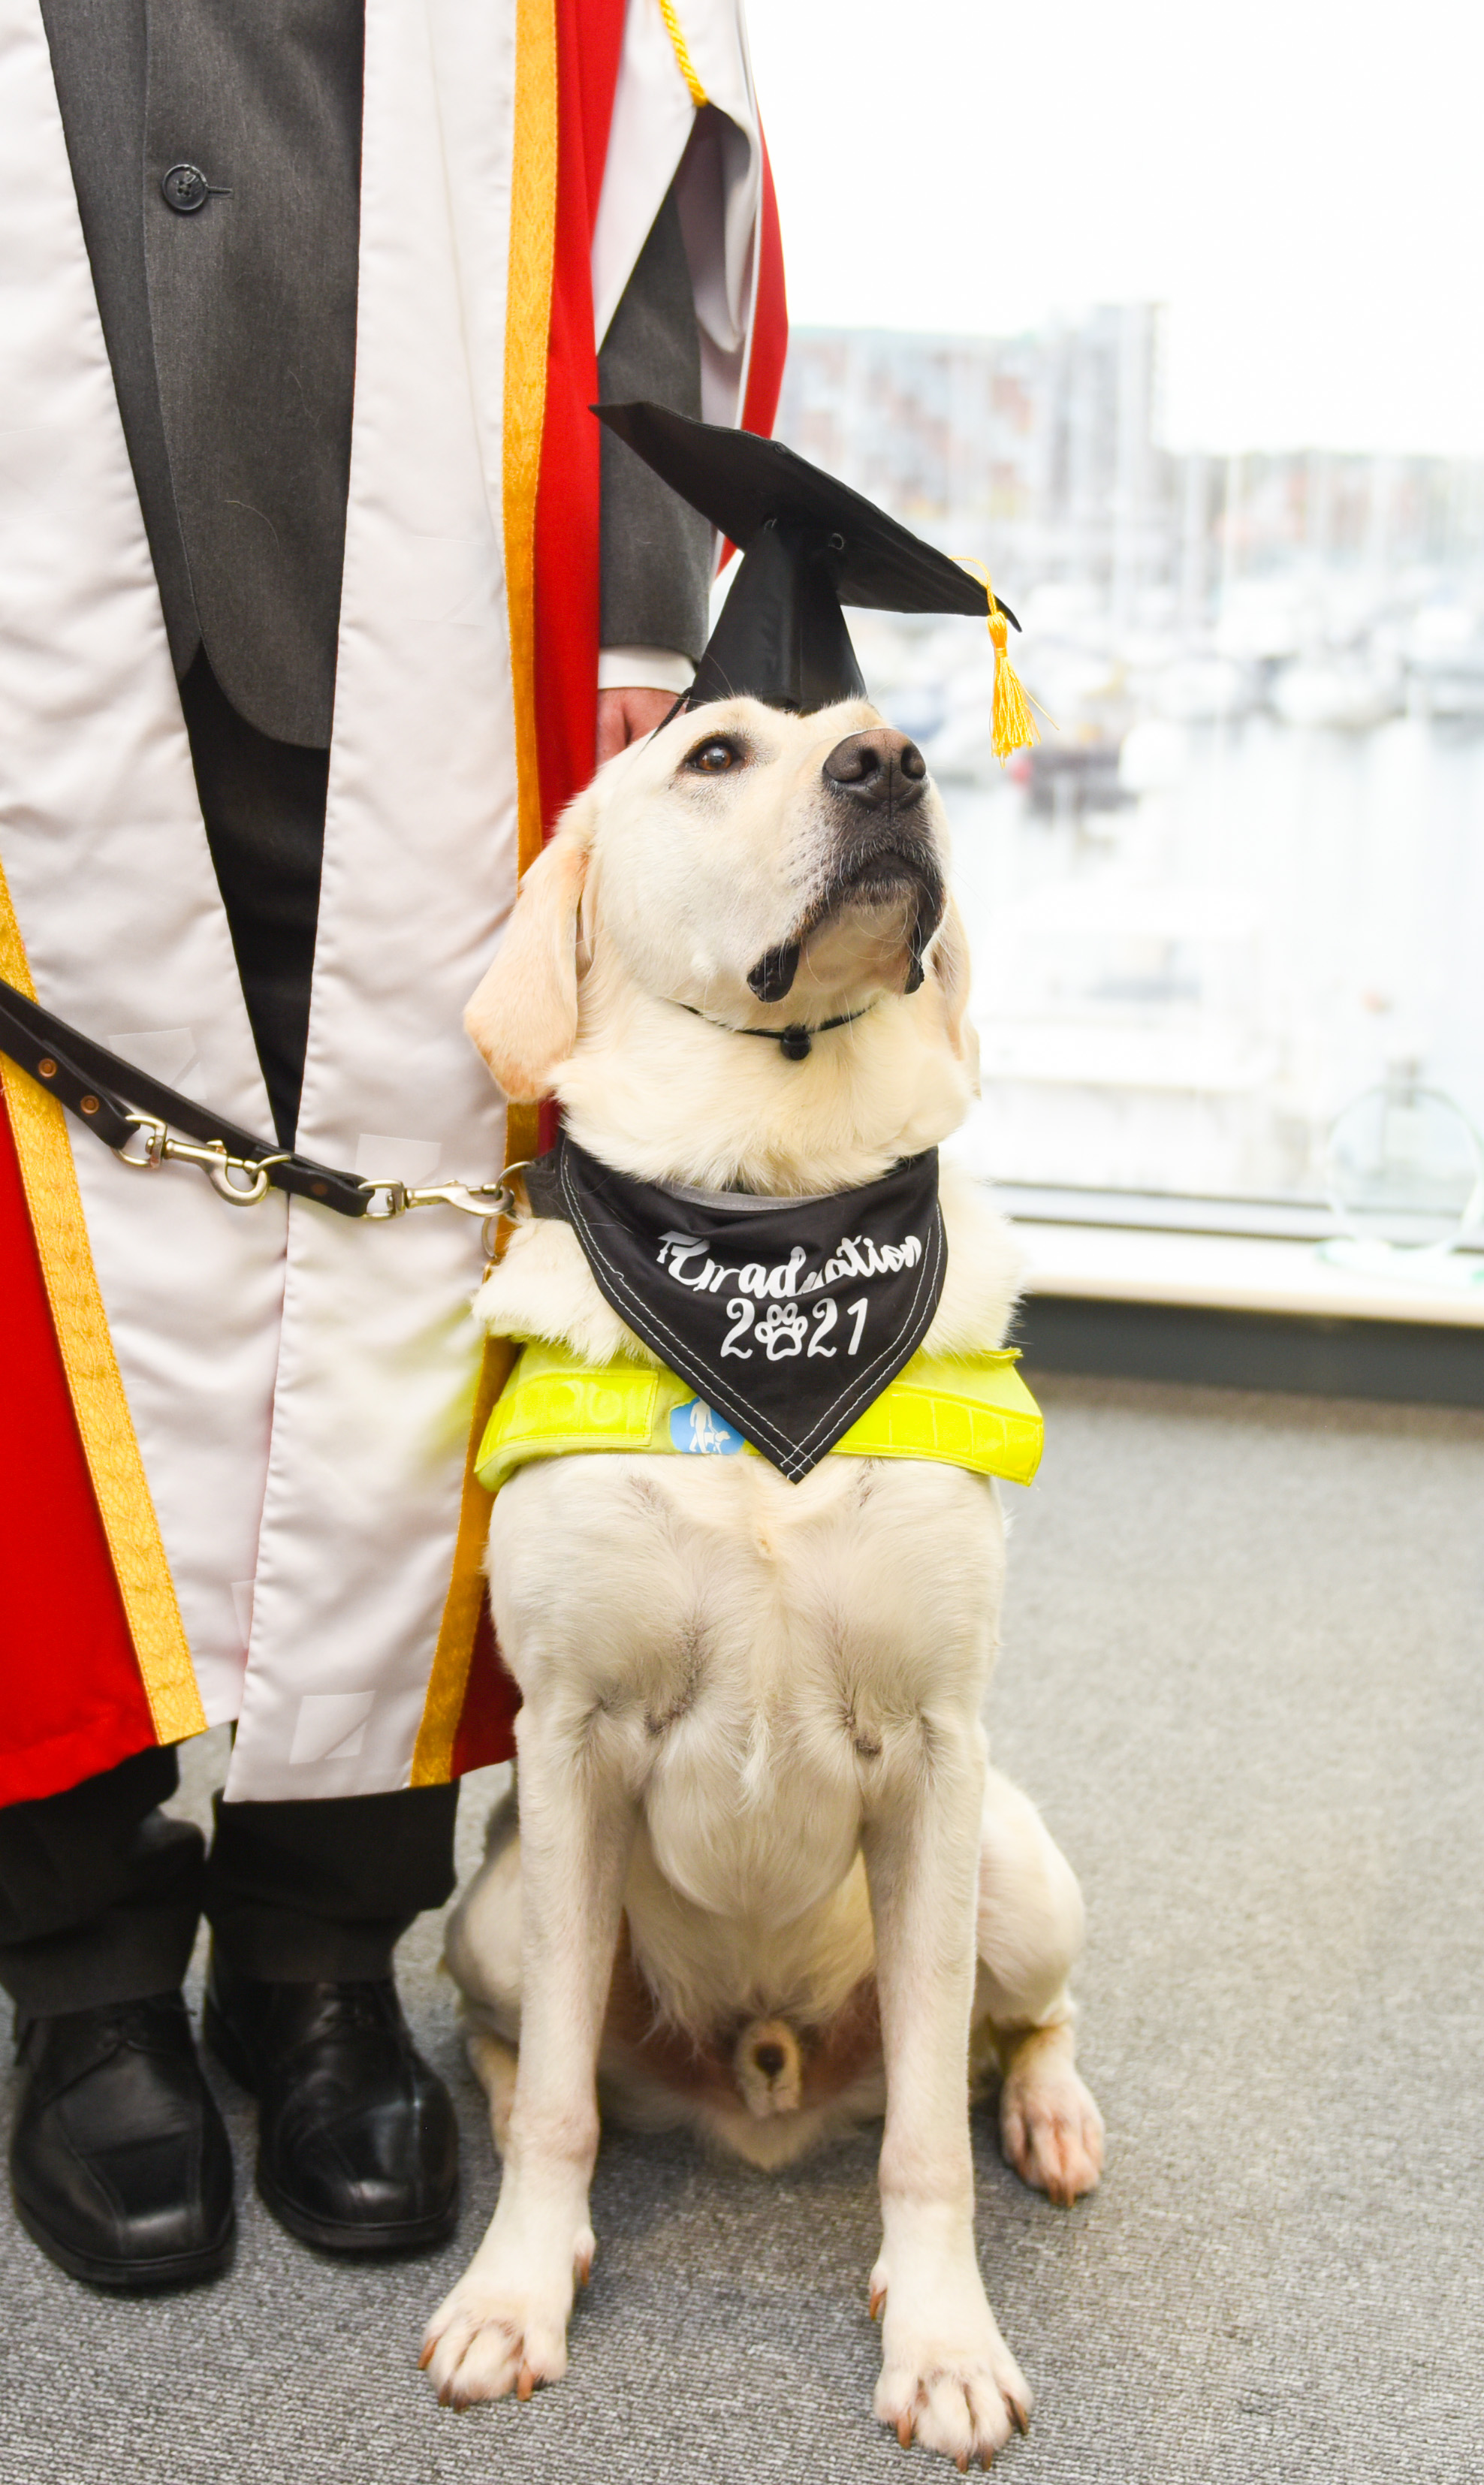 Robin's dog Hugo in red regalia and graduation cap